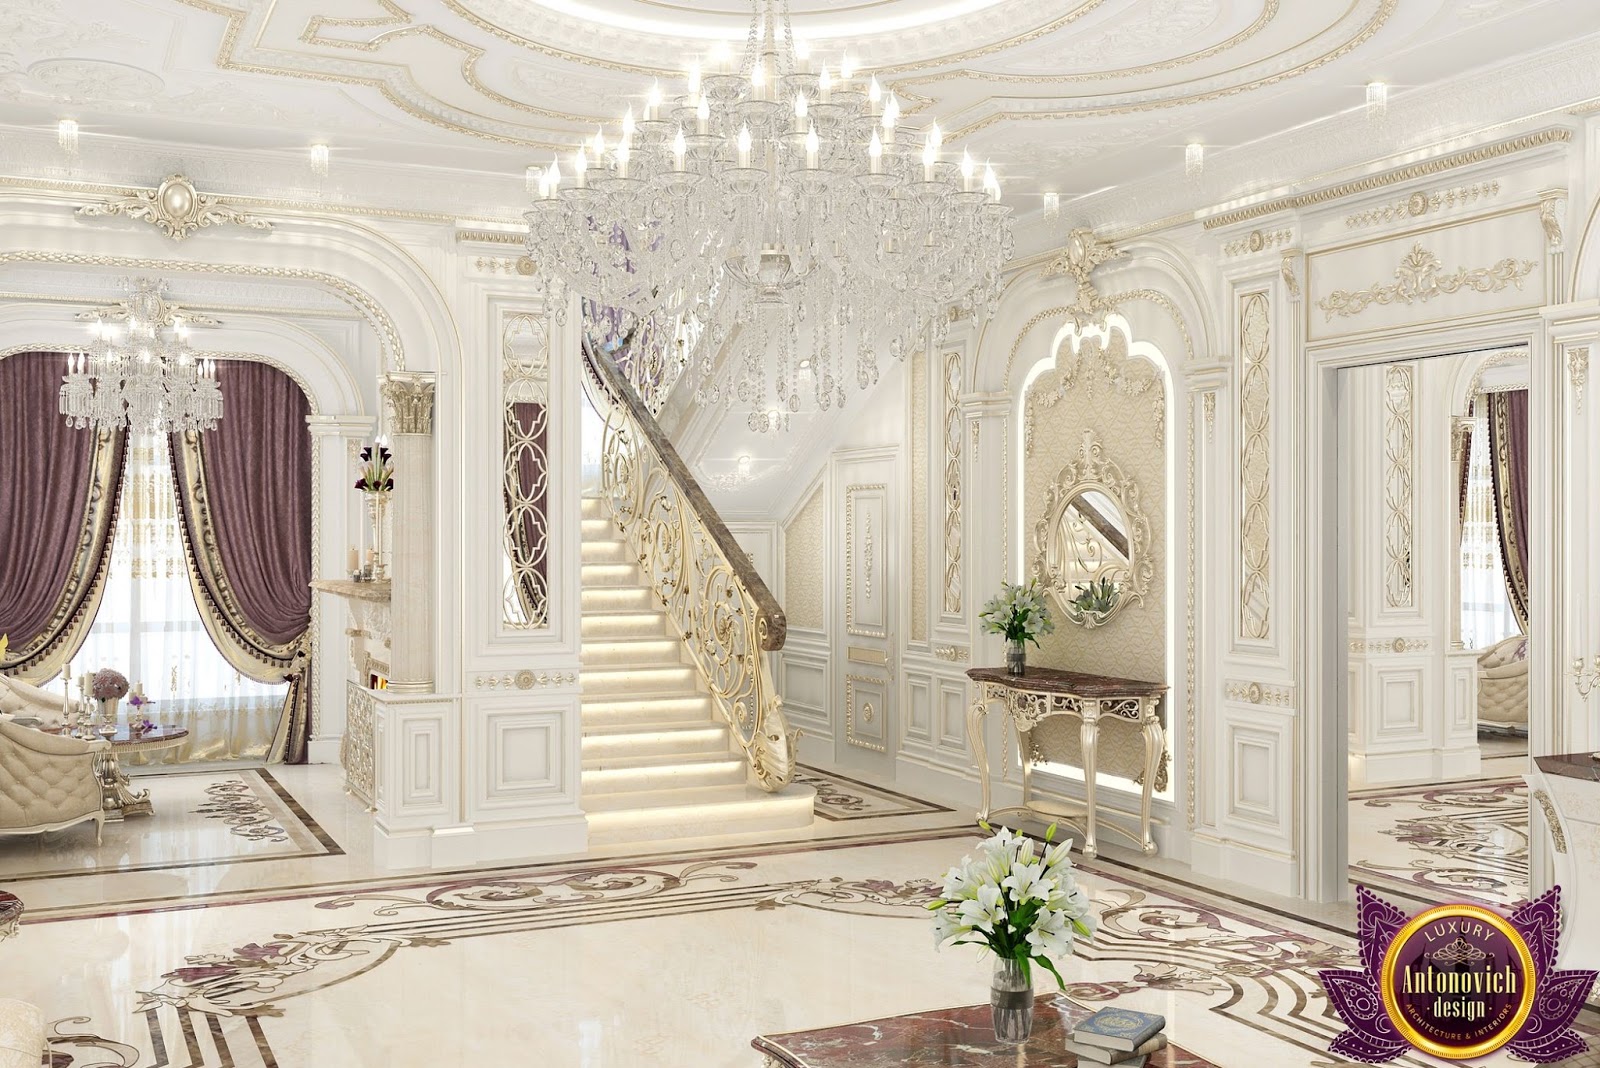 LUXURY ANTONOVICH DESIGN UAE: Most beautiful house Interiors from